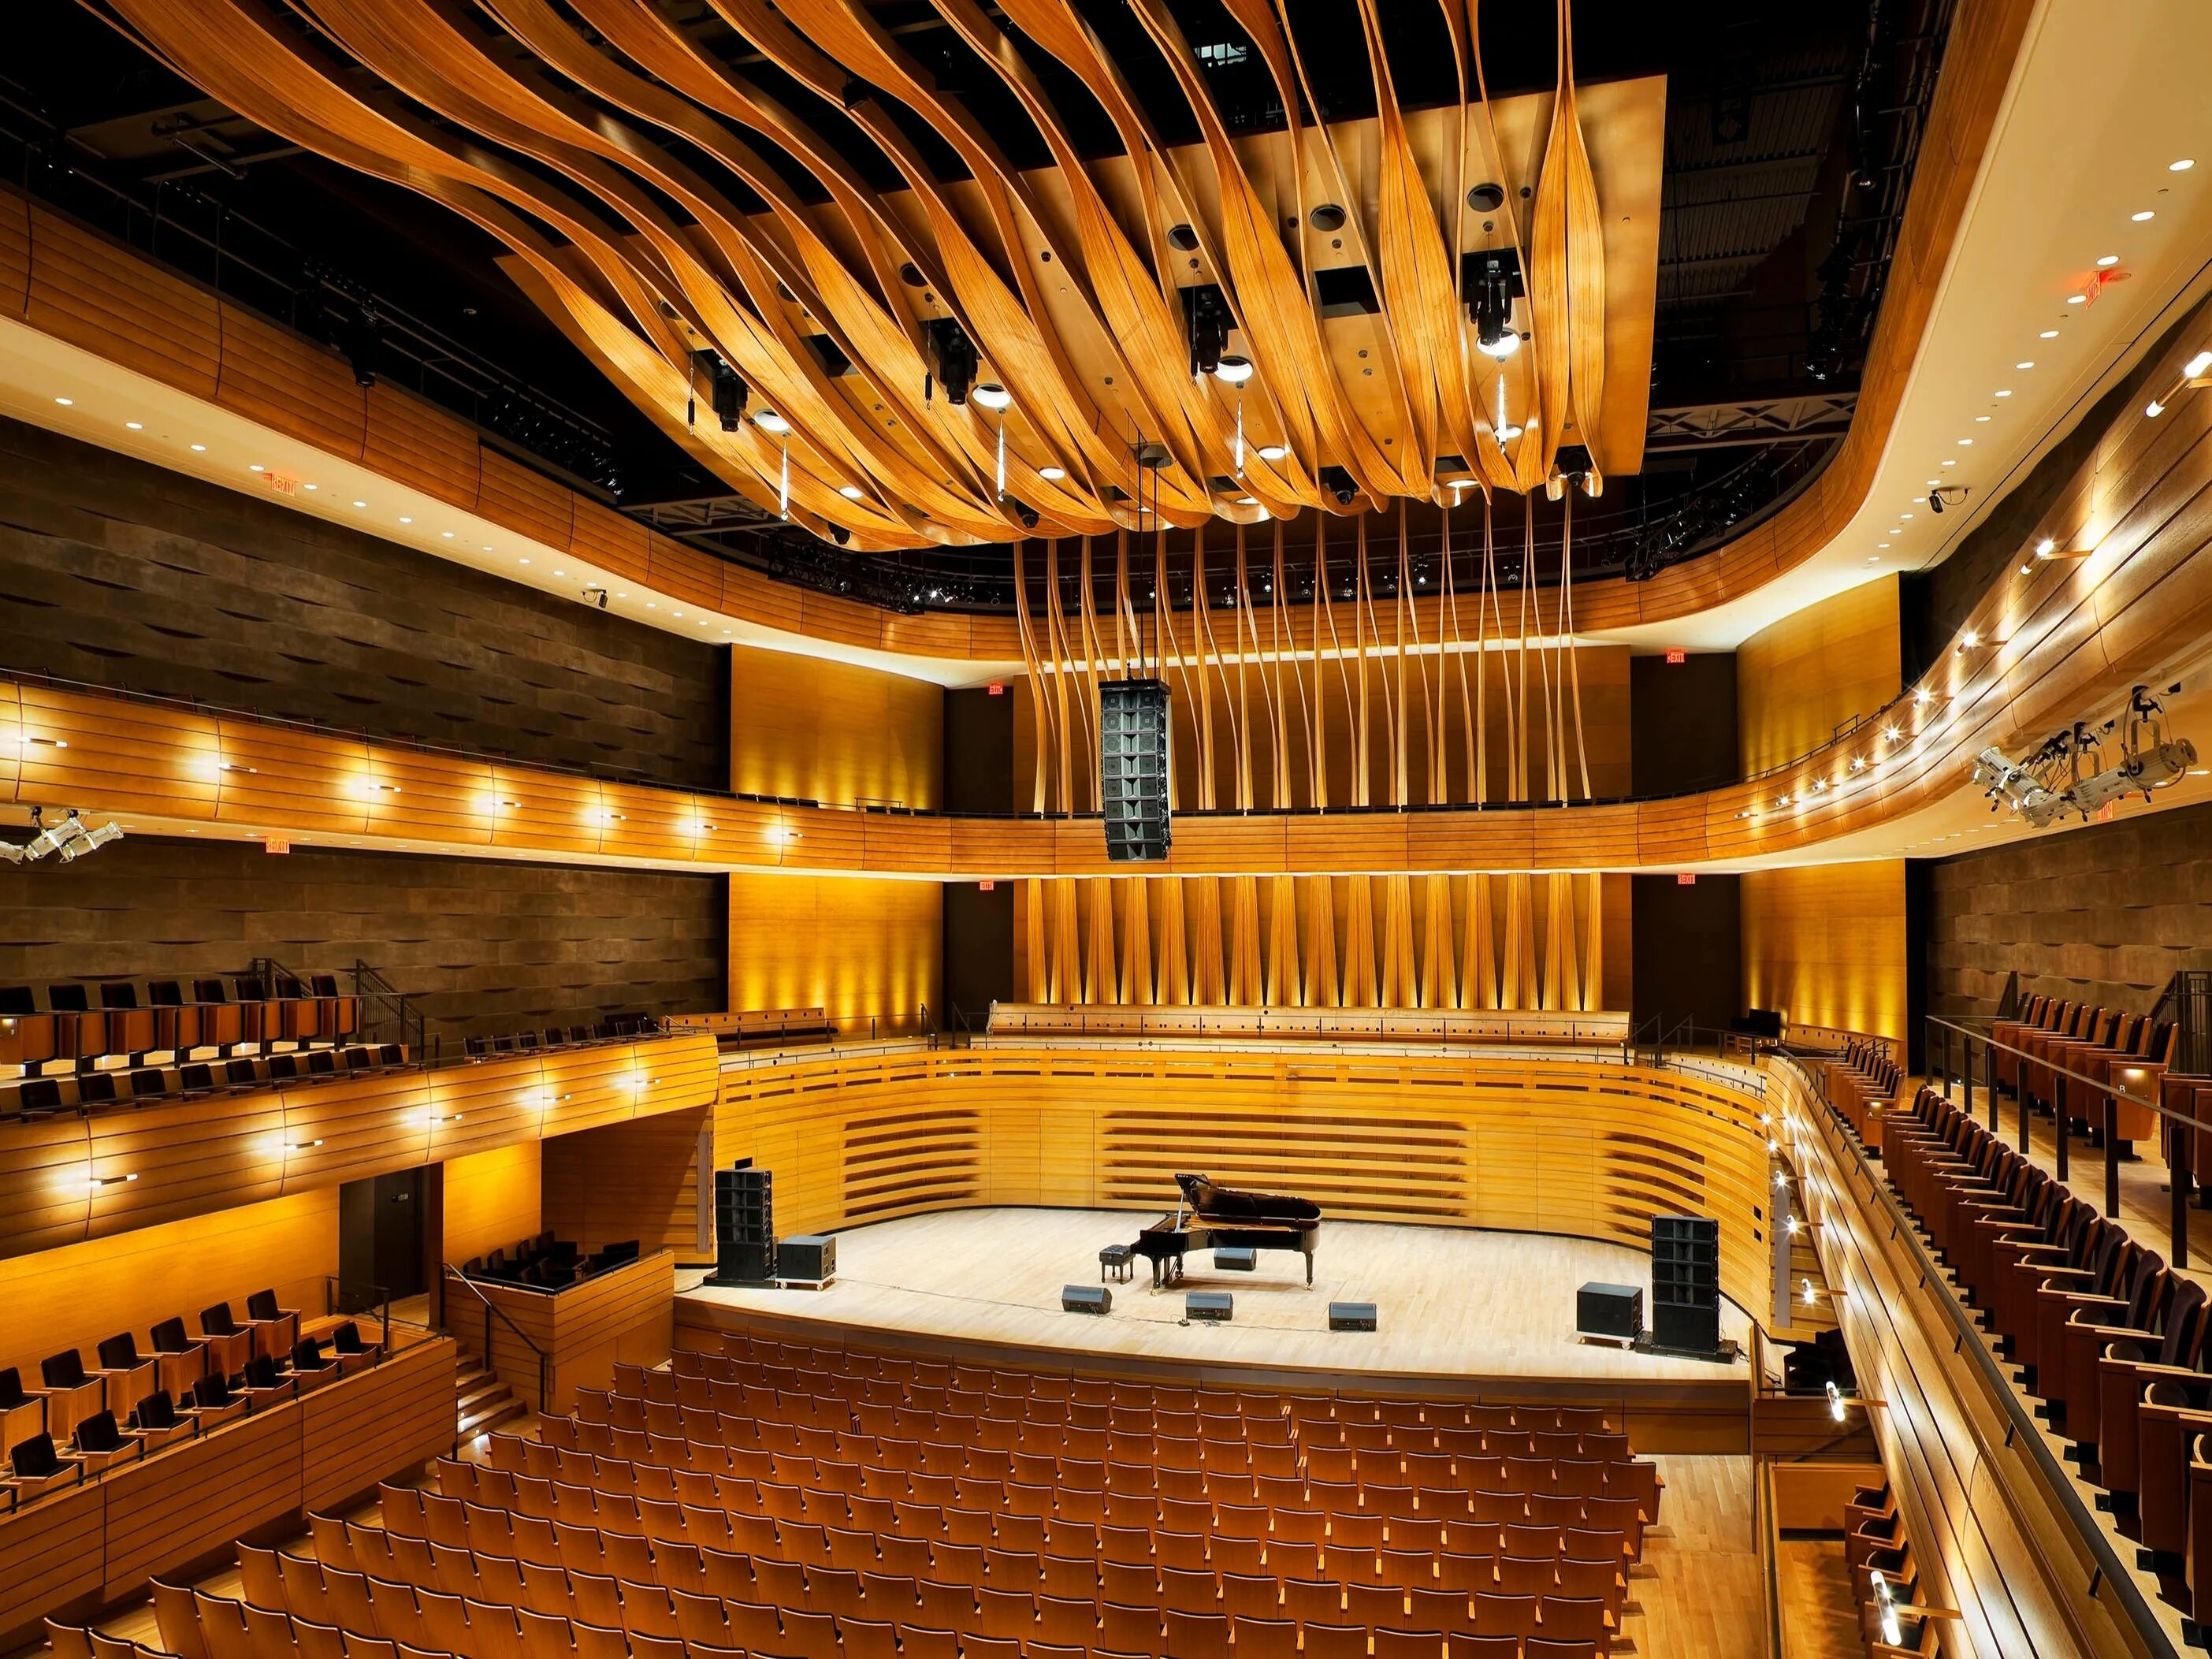 Koerner Hall, Royal Conservatory of Music зал. Концертный зал Торонто. Королевская музыкальная консерватория Торонто. Концертный зал Concert Hall. 25 концертных залов